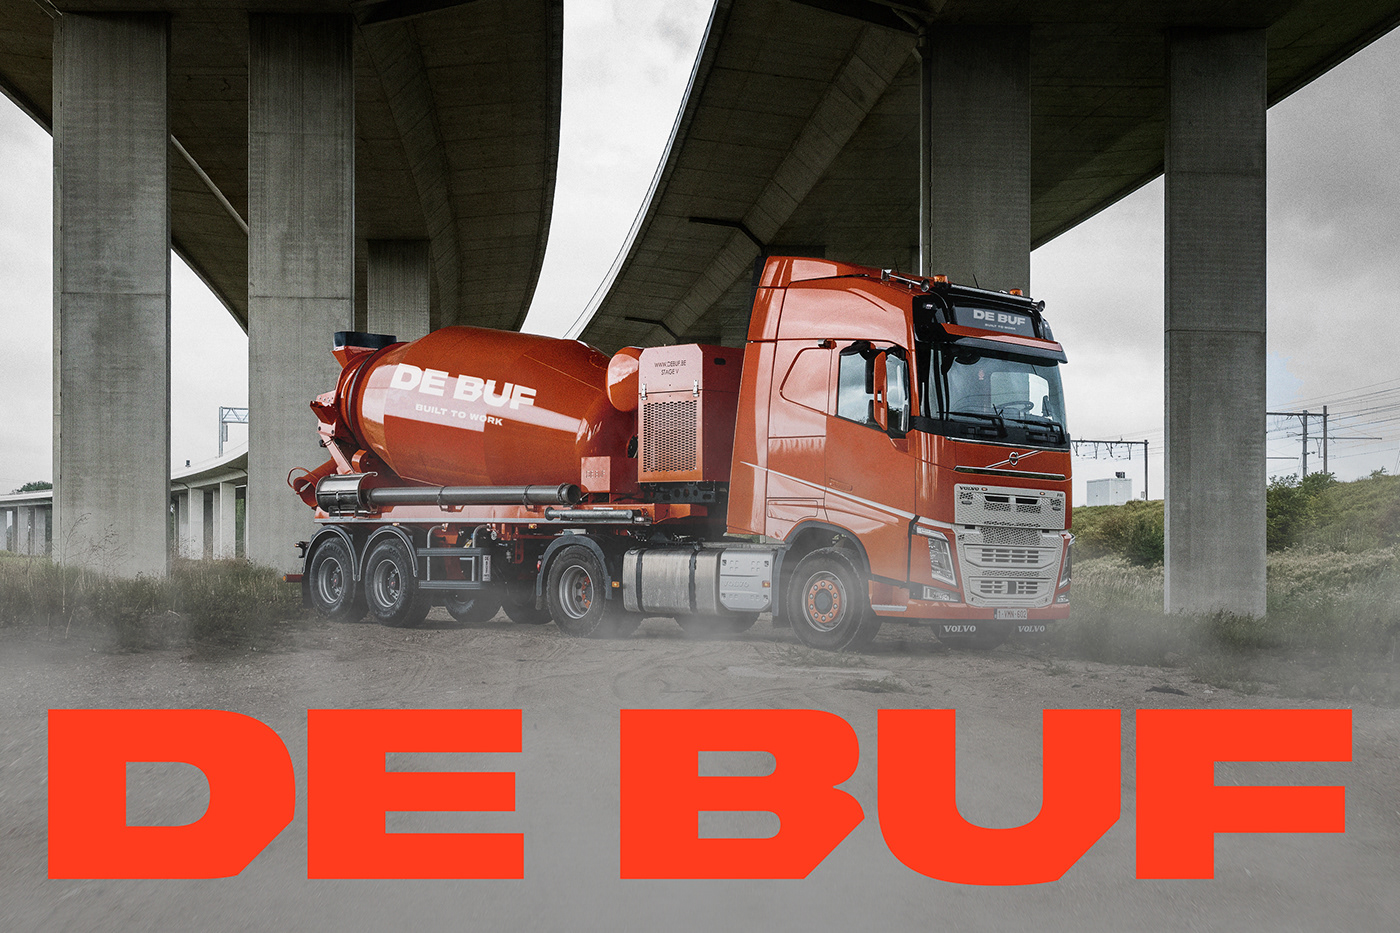 De Buf logo photographed on truck under bridge.